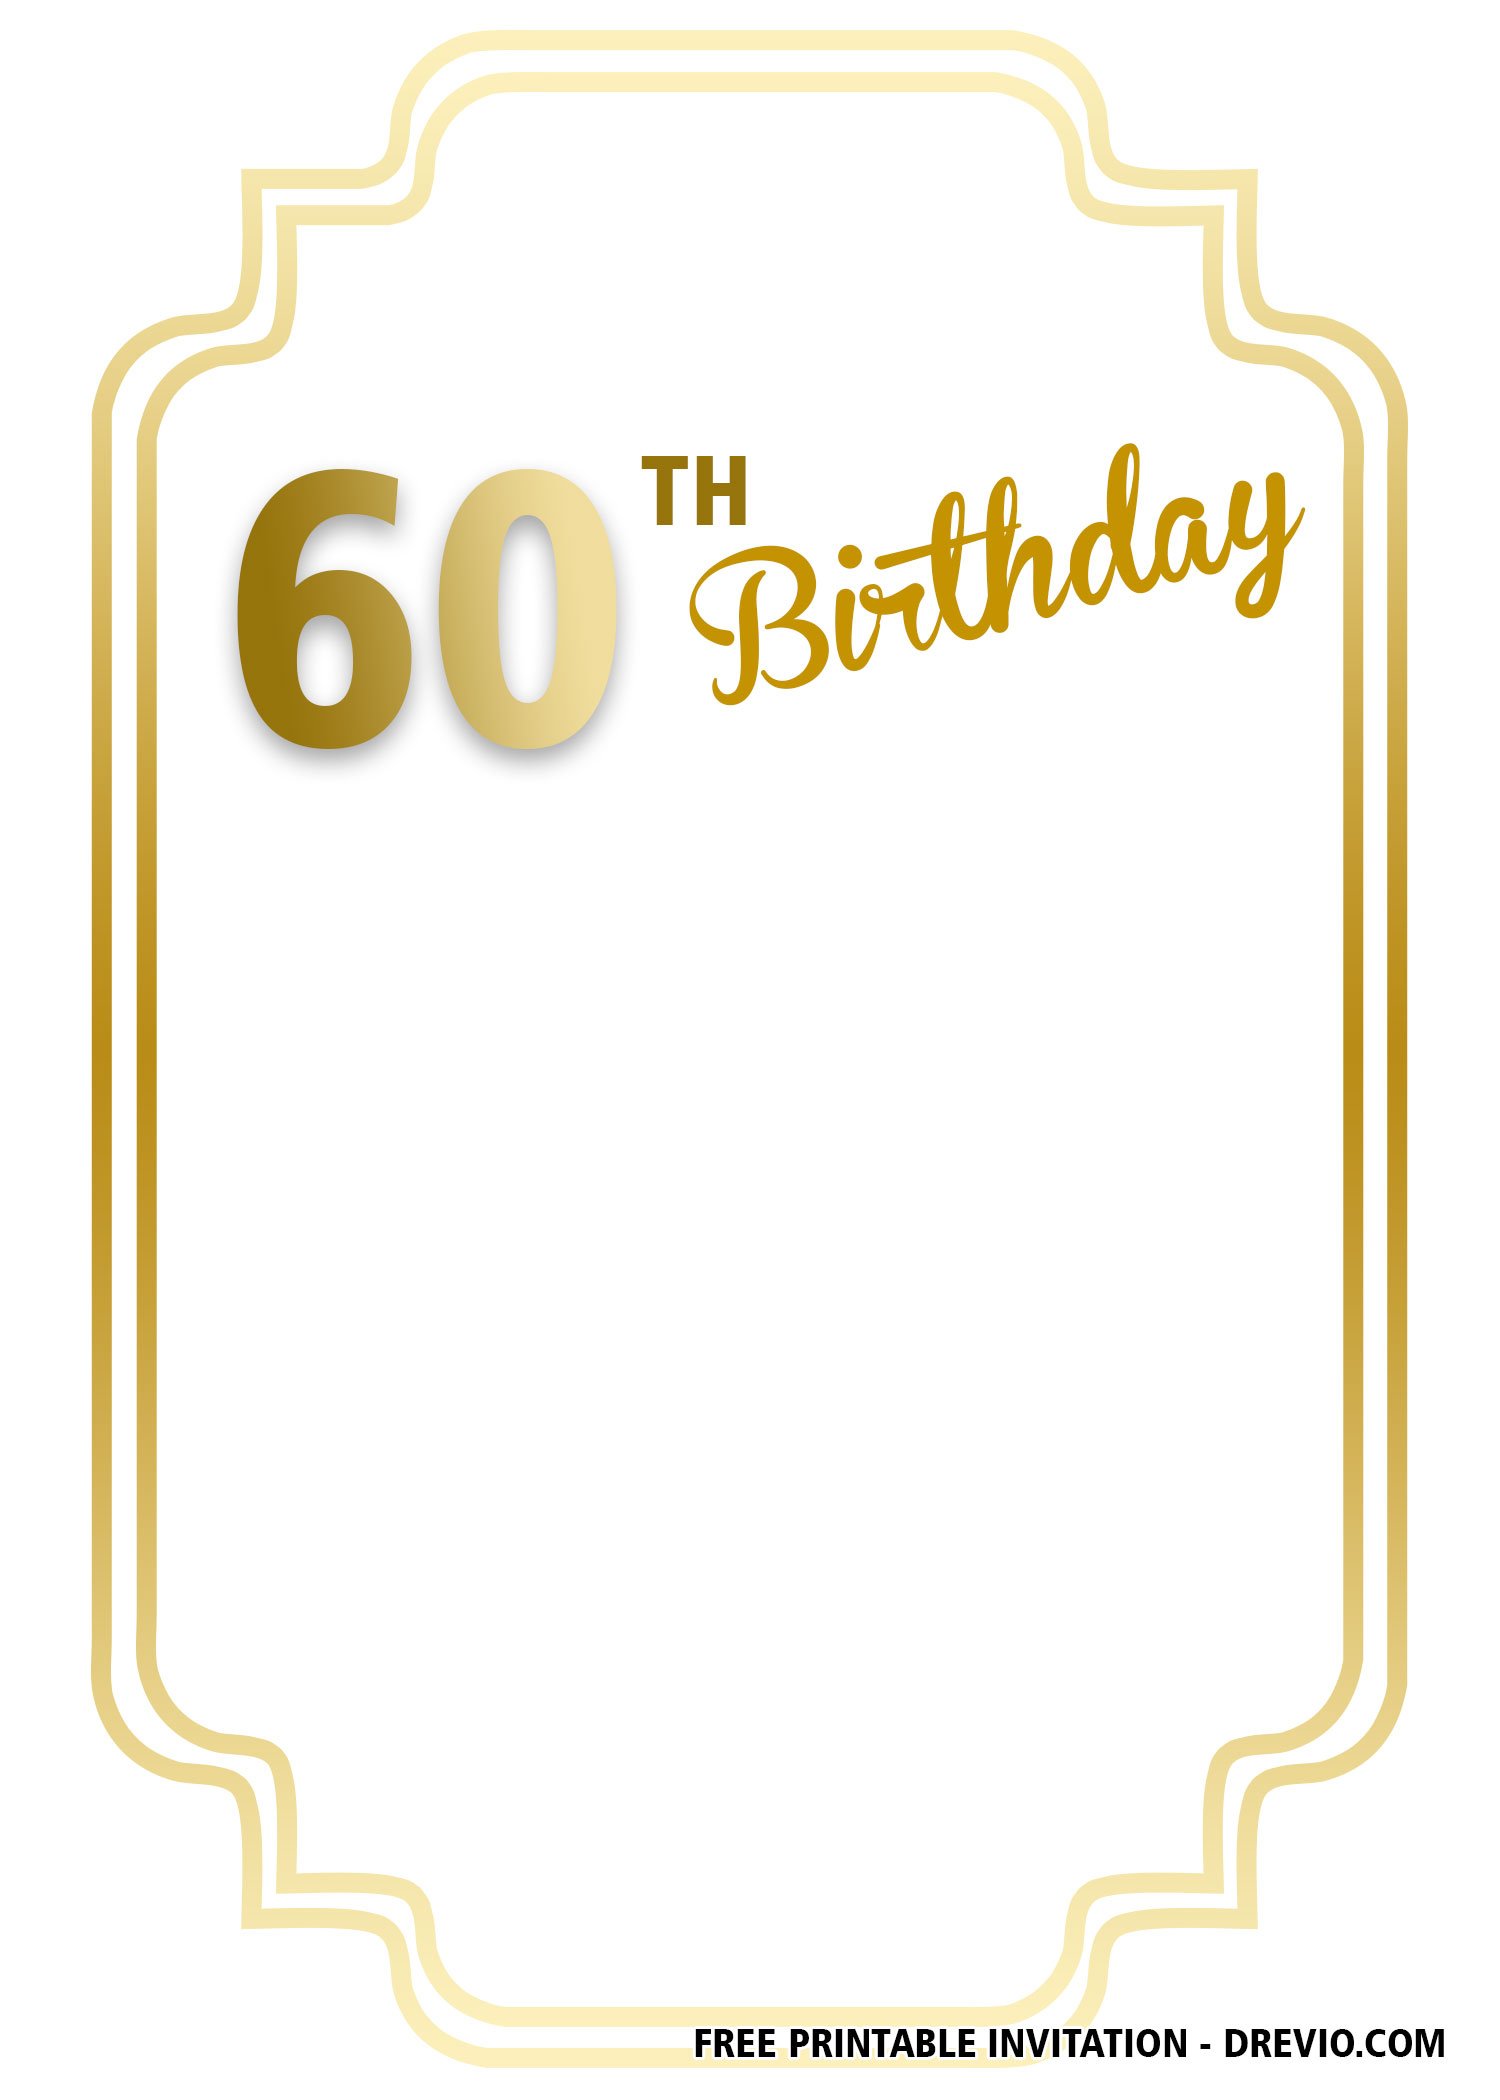 FREE Printable 90th Birthday Invitation Templates | DREVIO